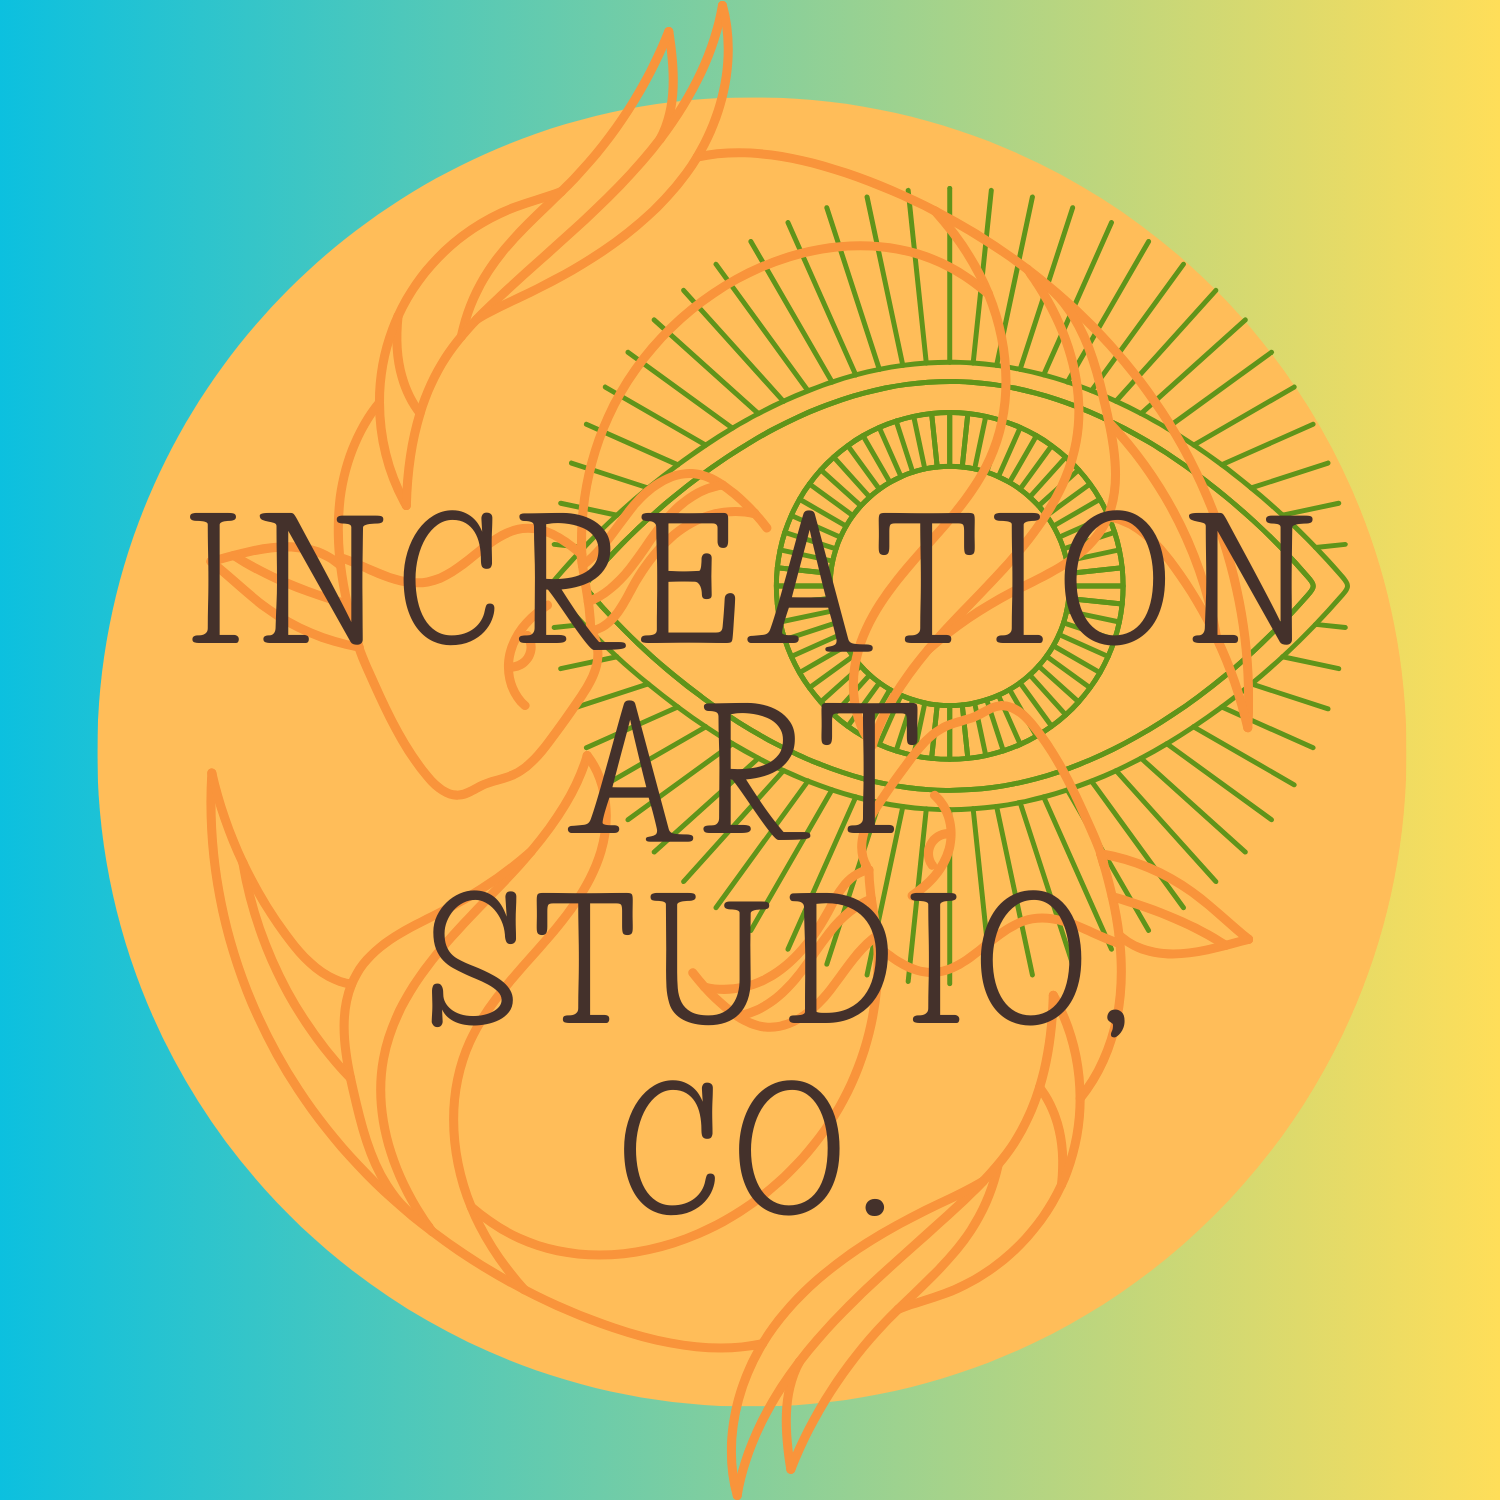 InCreation Art Studio, Co.